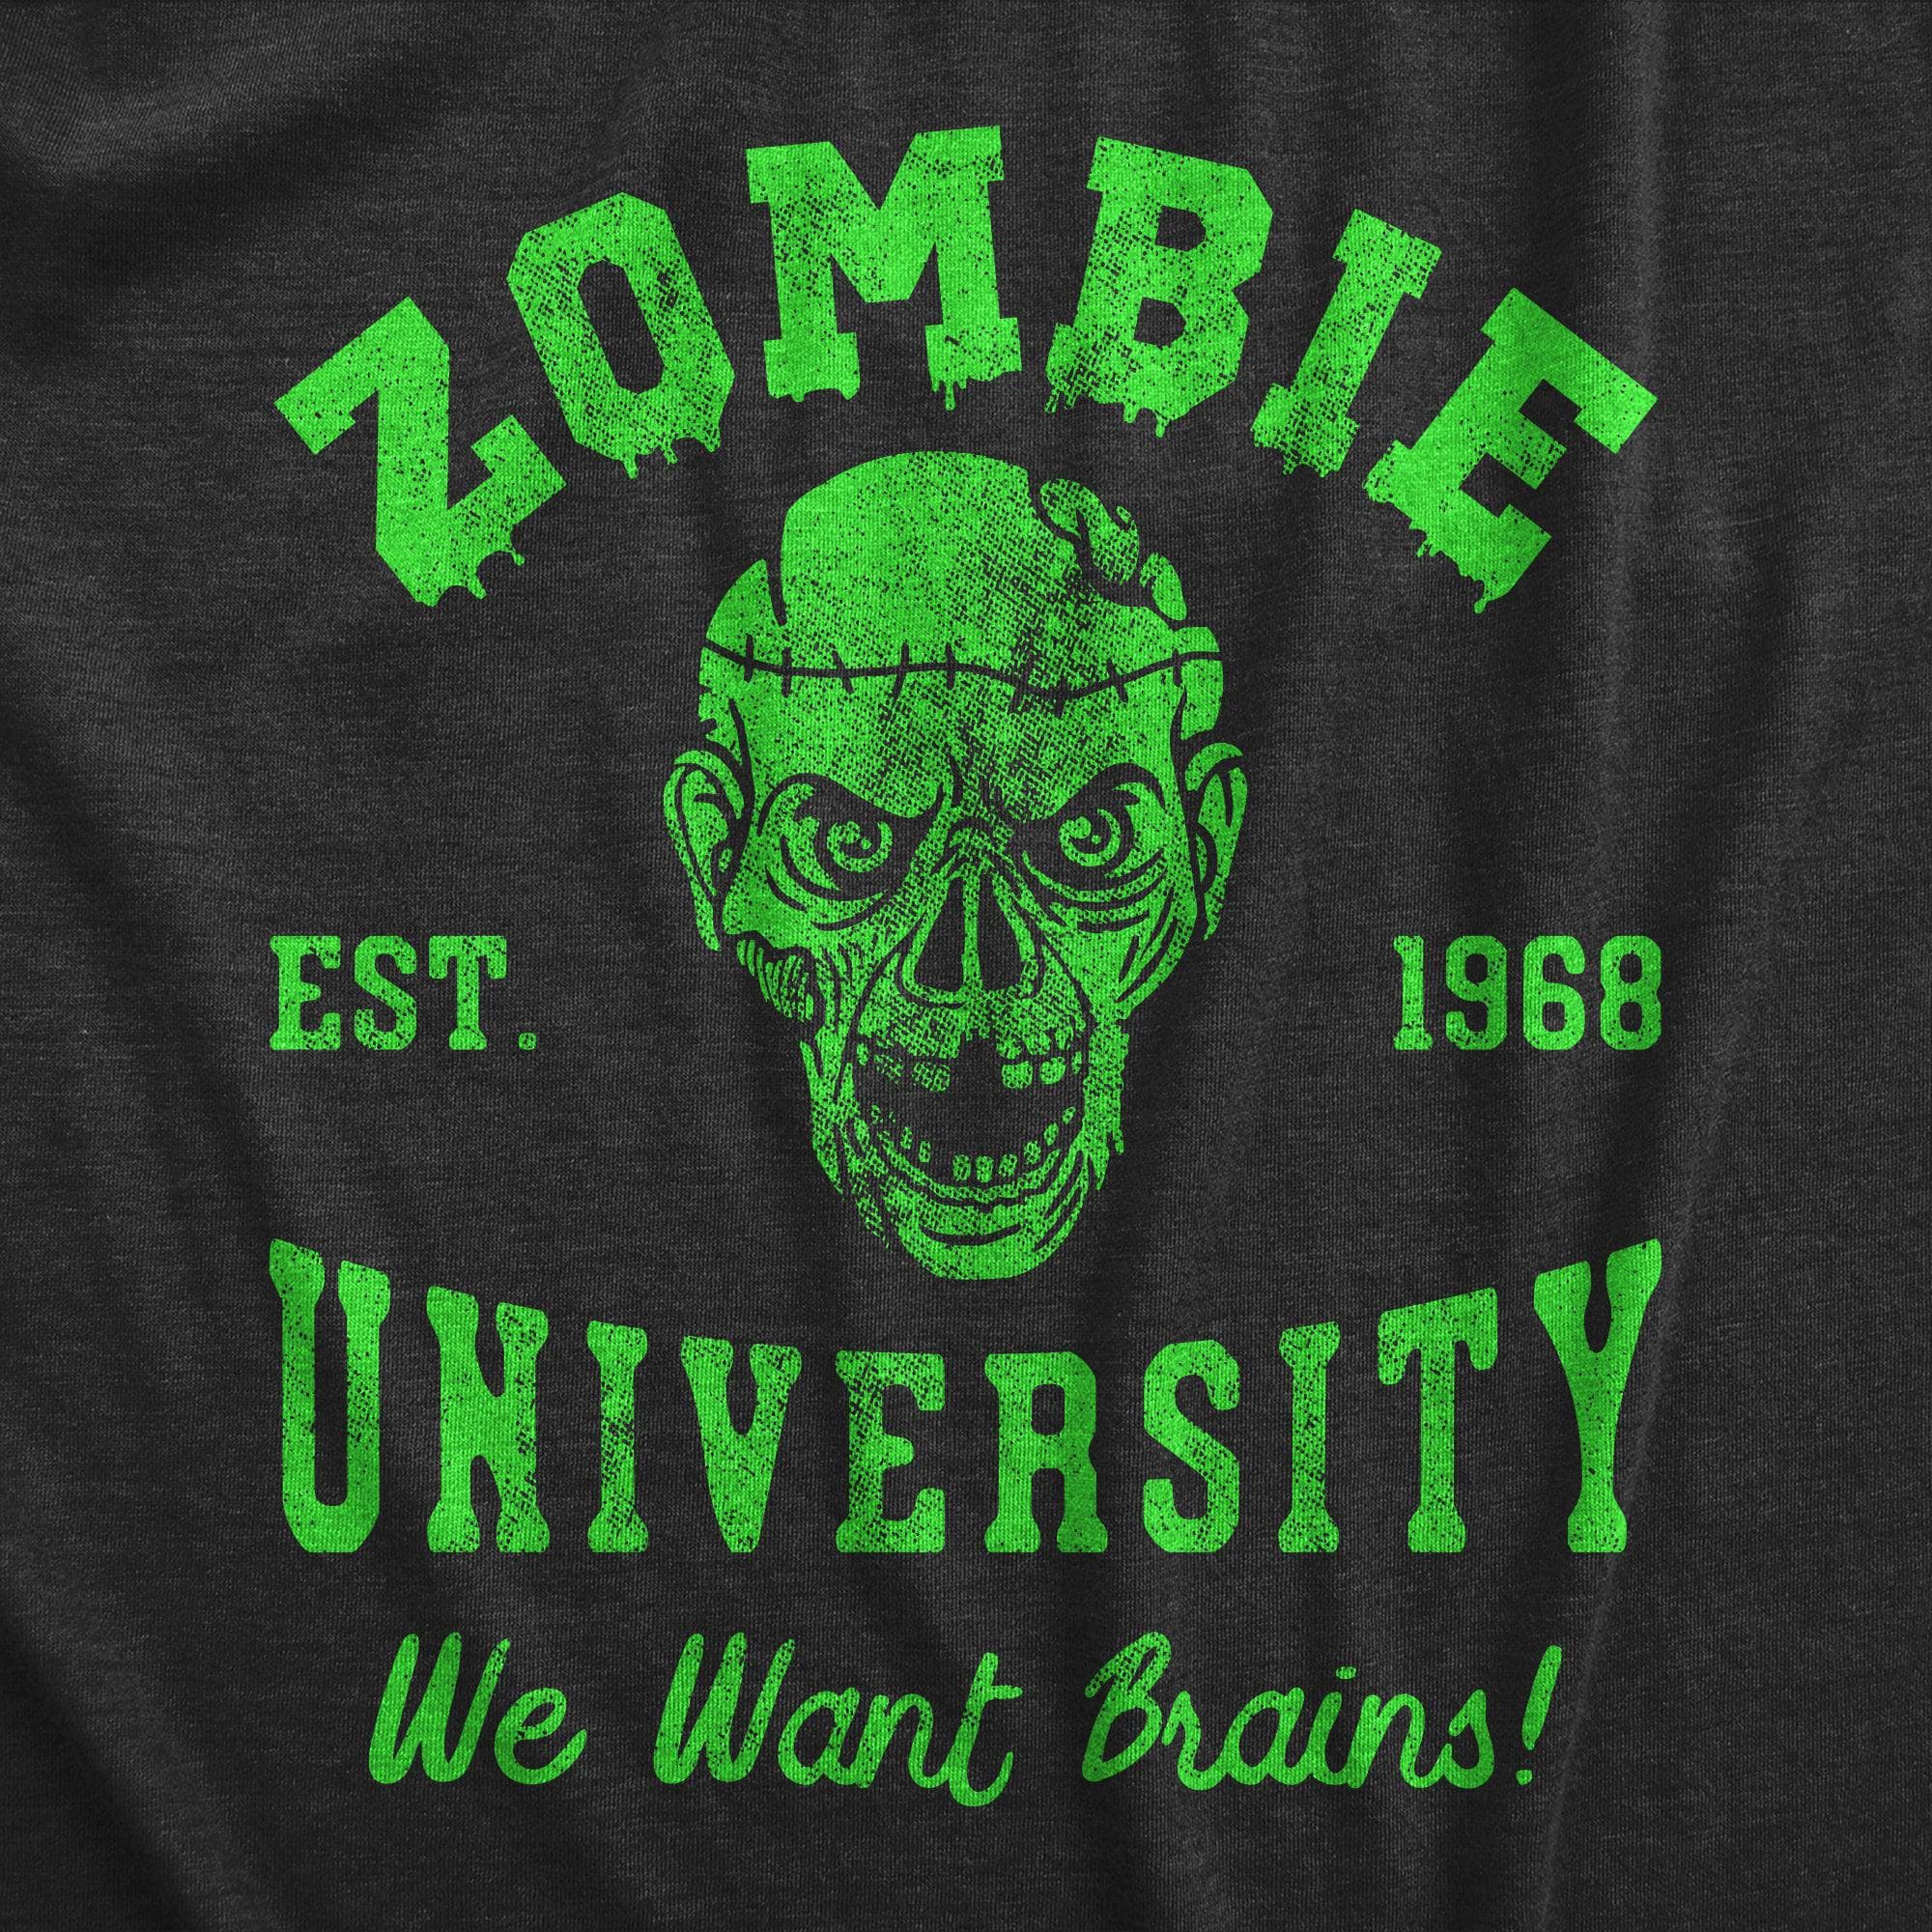 Zombie University Men's Tshirt  -  Crazy Dog T-Shirts